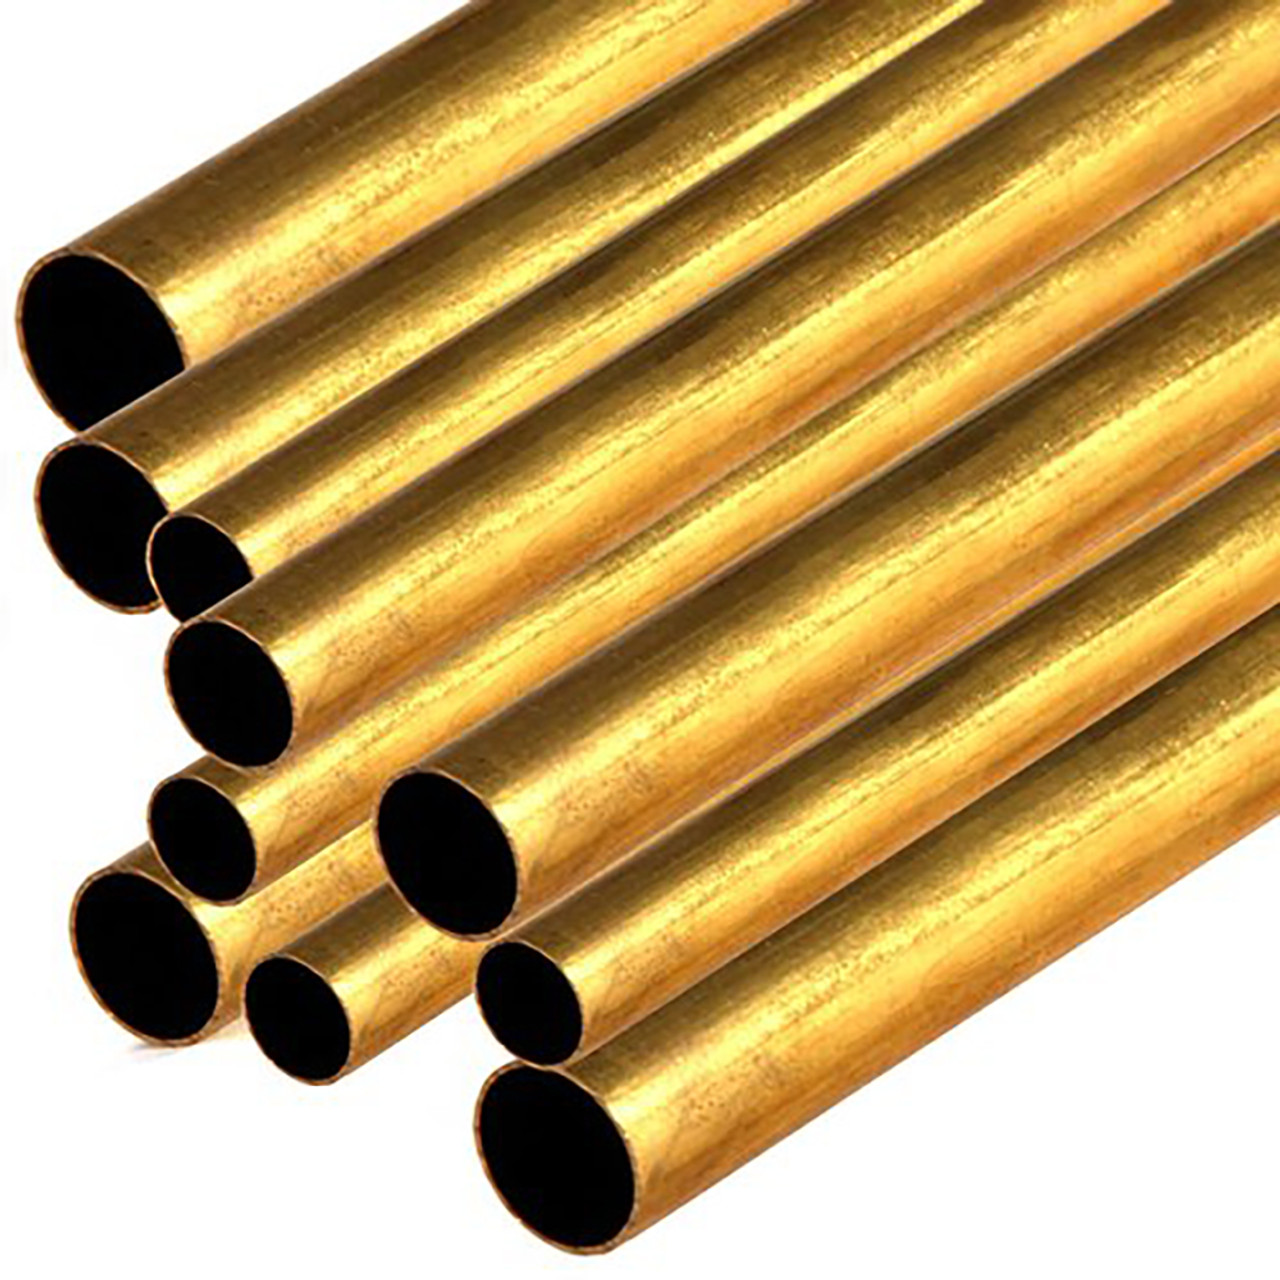 63/37 brass tube suppliers, C27400 yellow brass tube, astm b135 brass tube